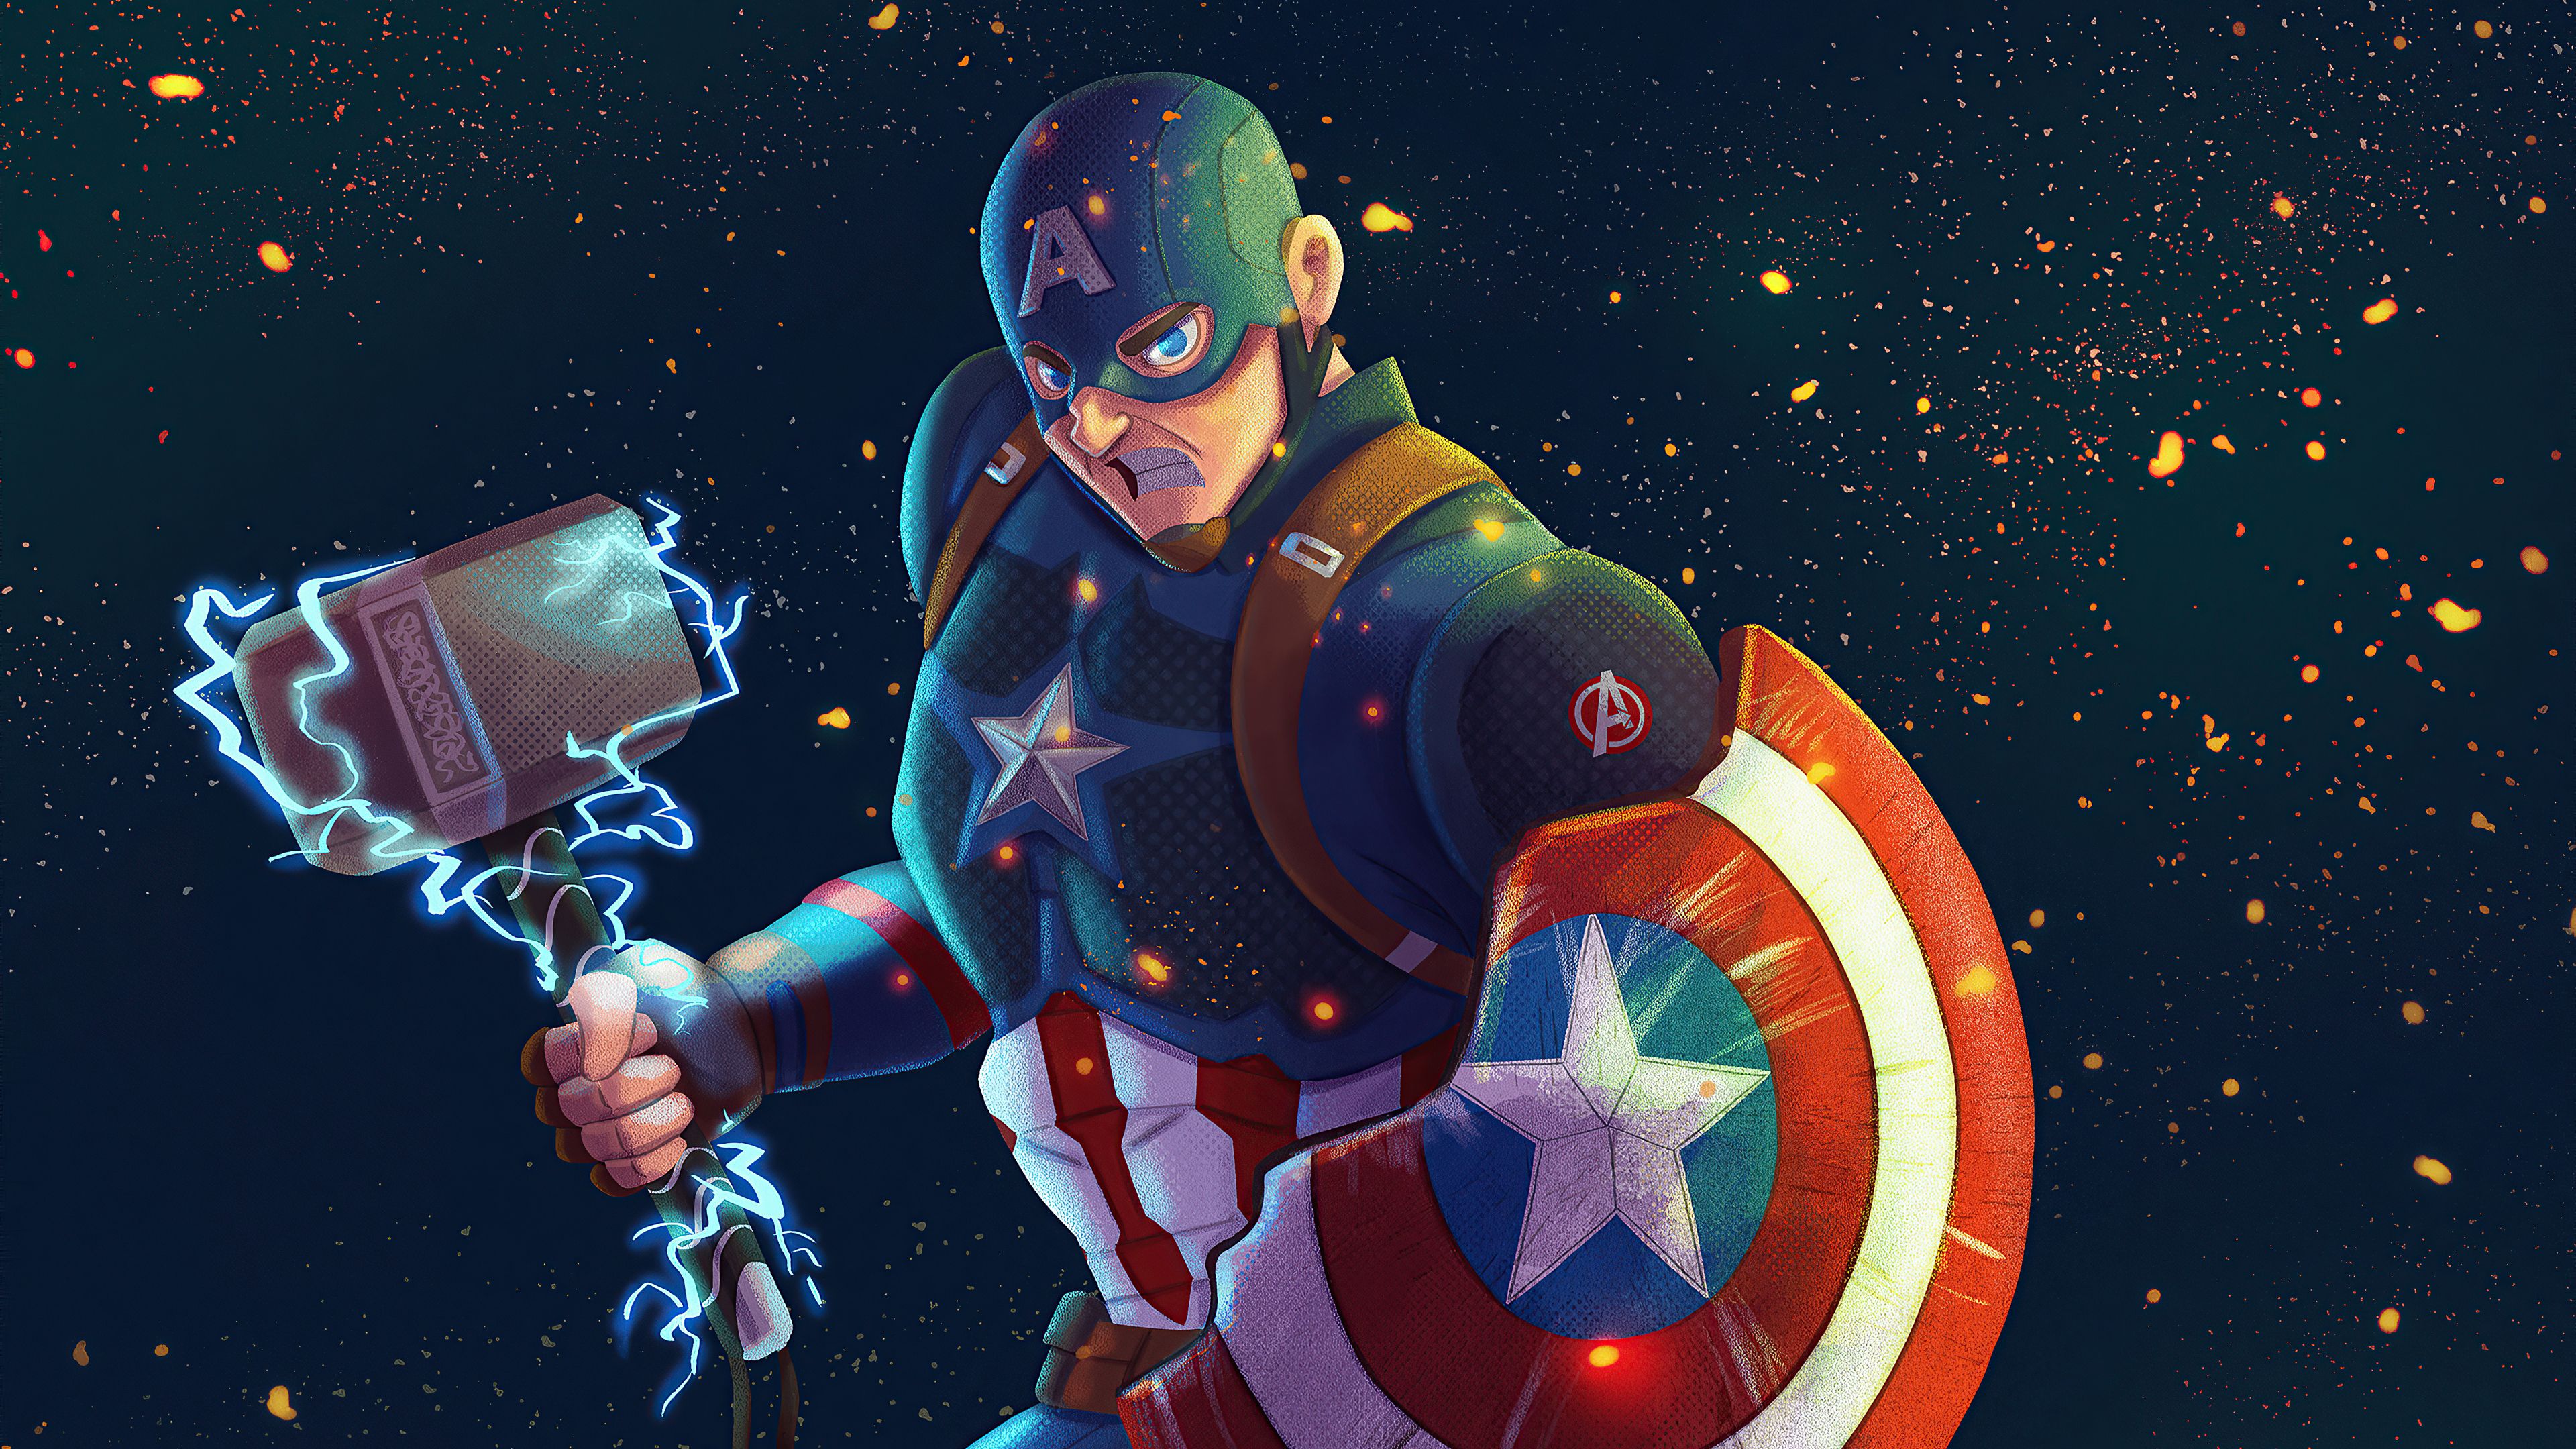 Captain America Marvel Comic Art Wallpaper, HD Superheroes 4K Wallpaper, Image, Photo and Background